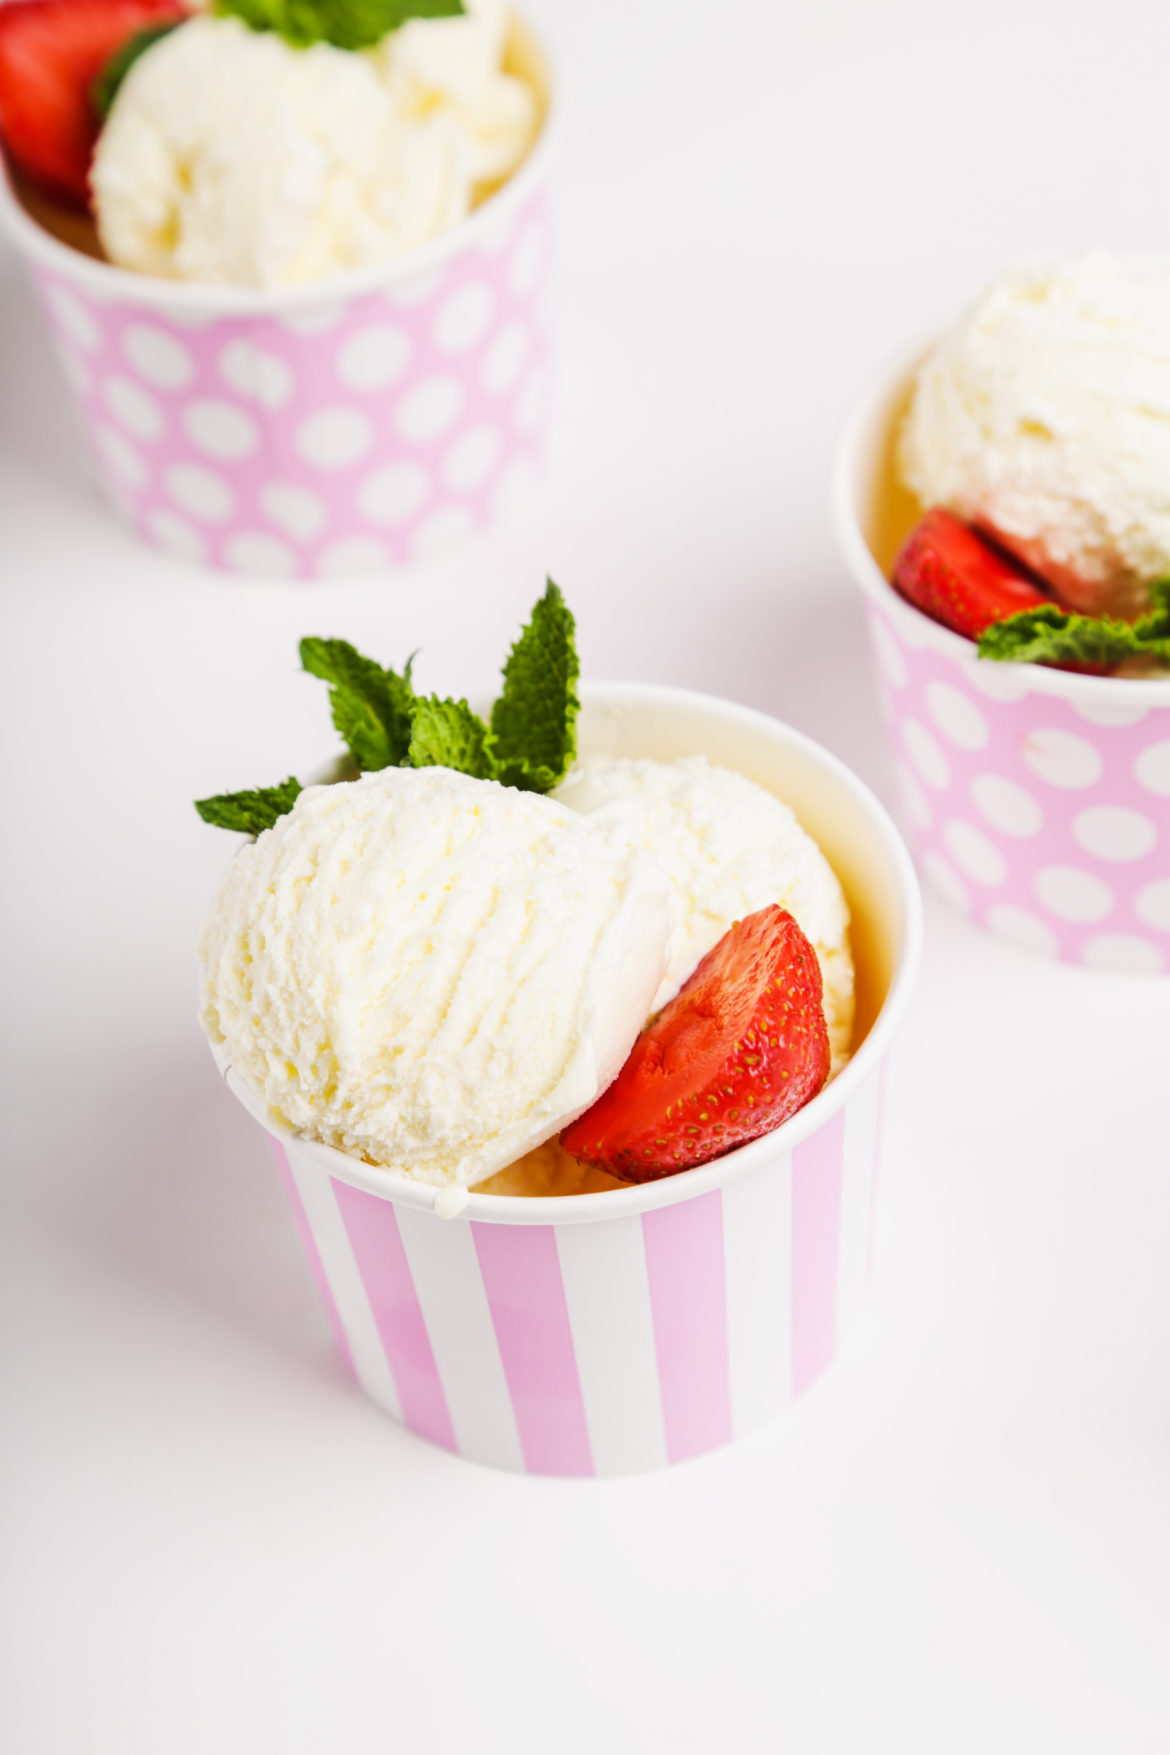 Gelato Day, i gelatieri Ascom celebrano yogurt e fragole